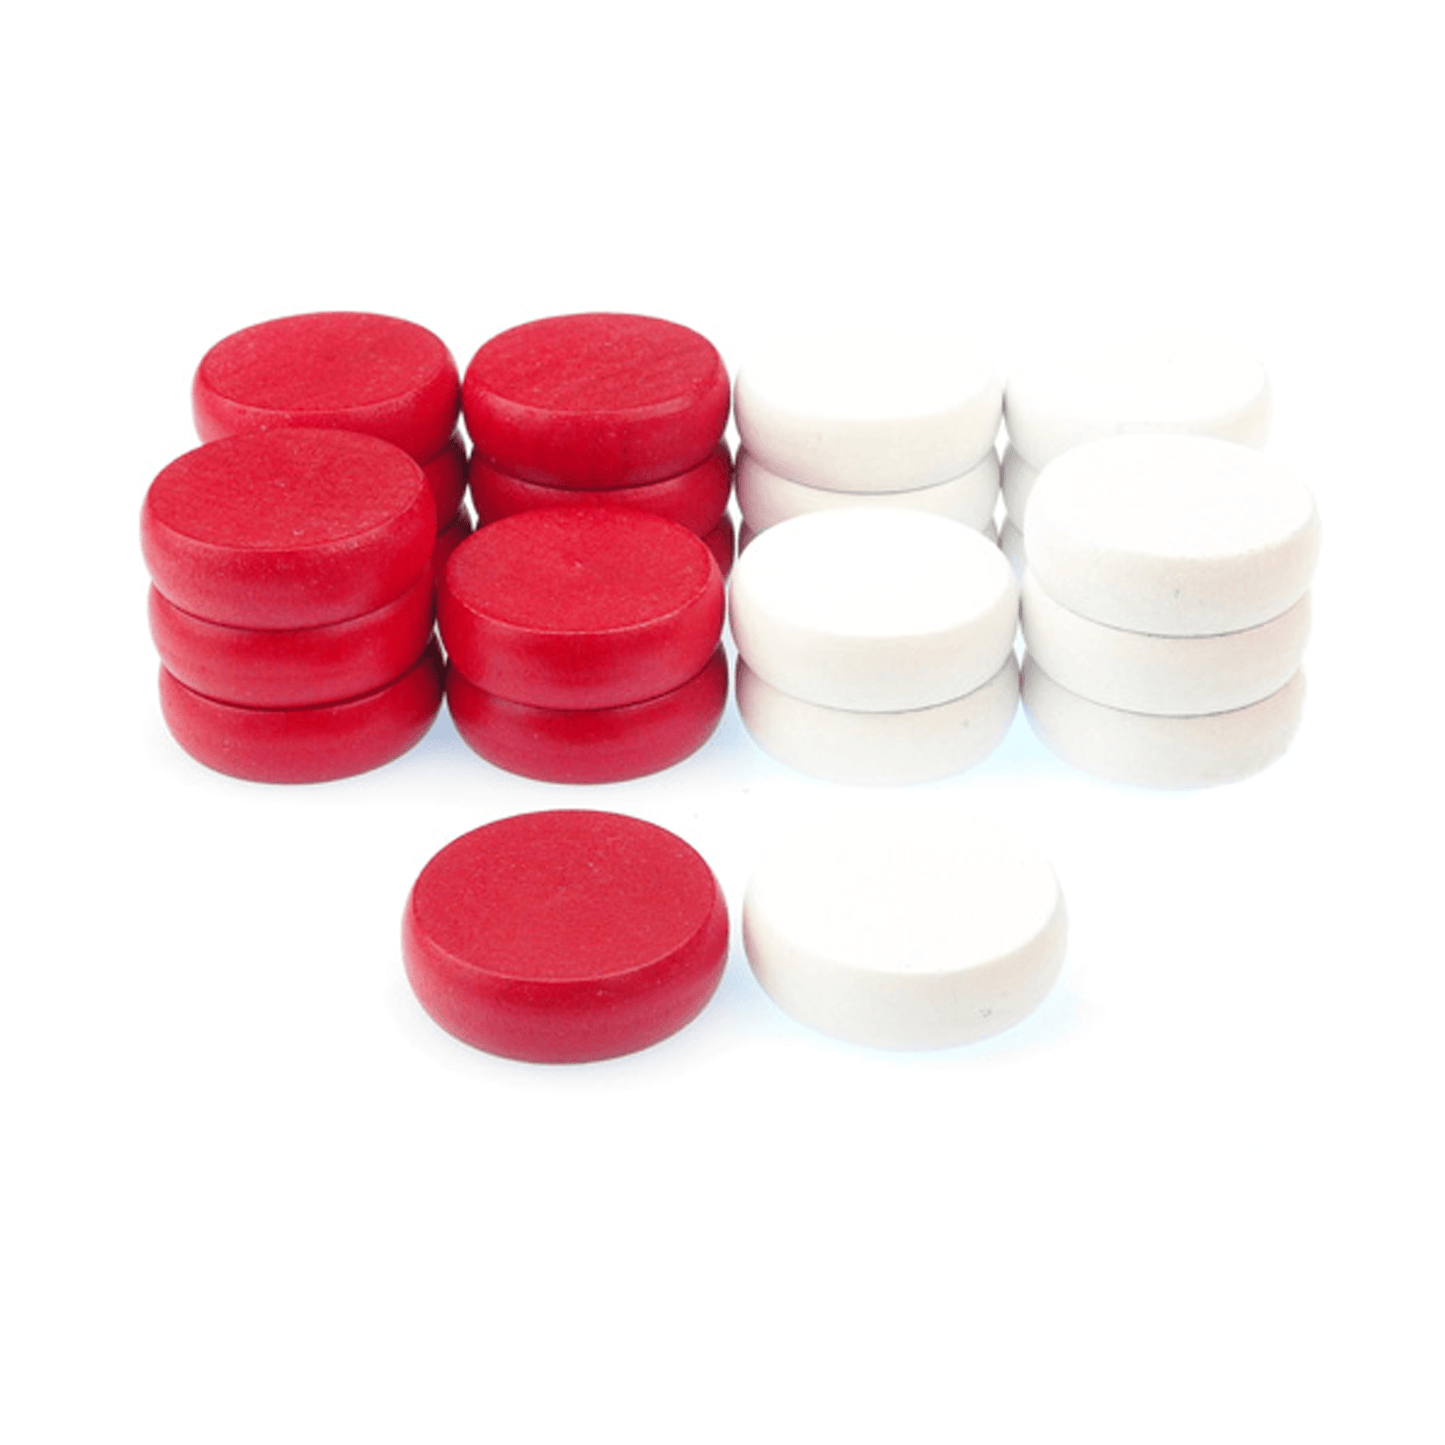 26 Red & White Crokinole Tournament Discs + Bag (13 Red & 13 White) - Crokinole Europe